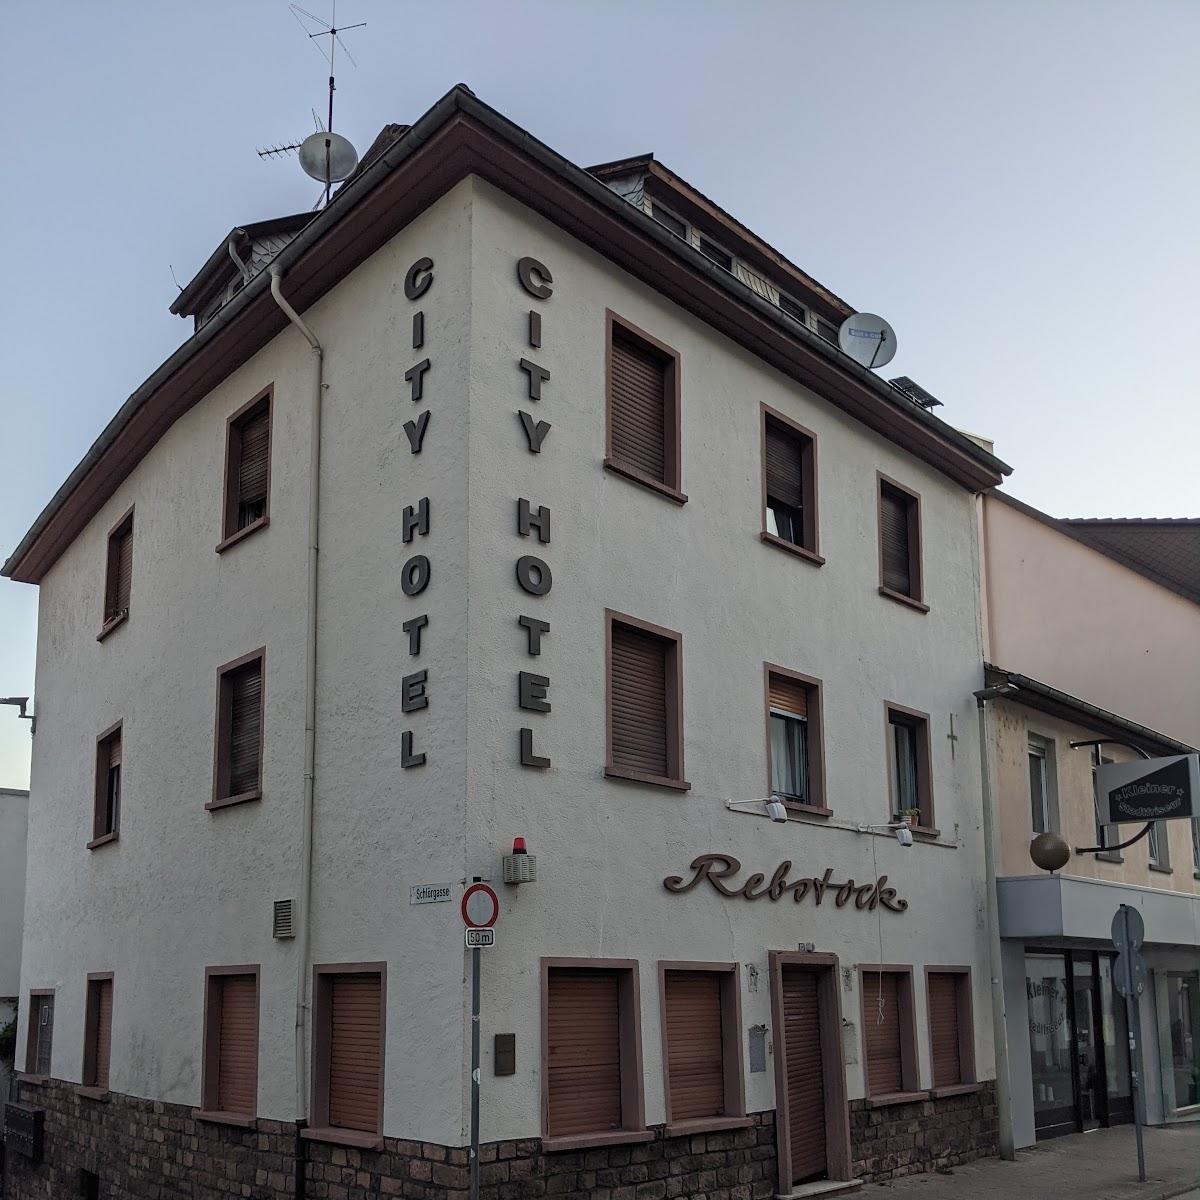 Restaurant "Rebstock" in Bad Kreuznach